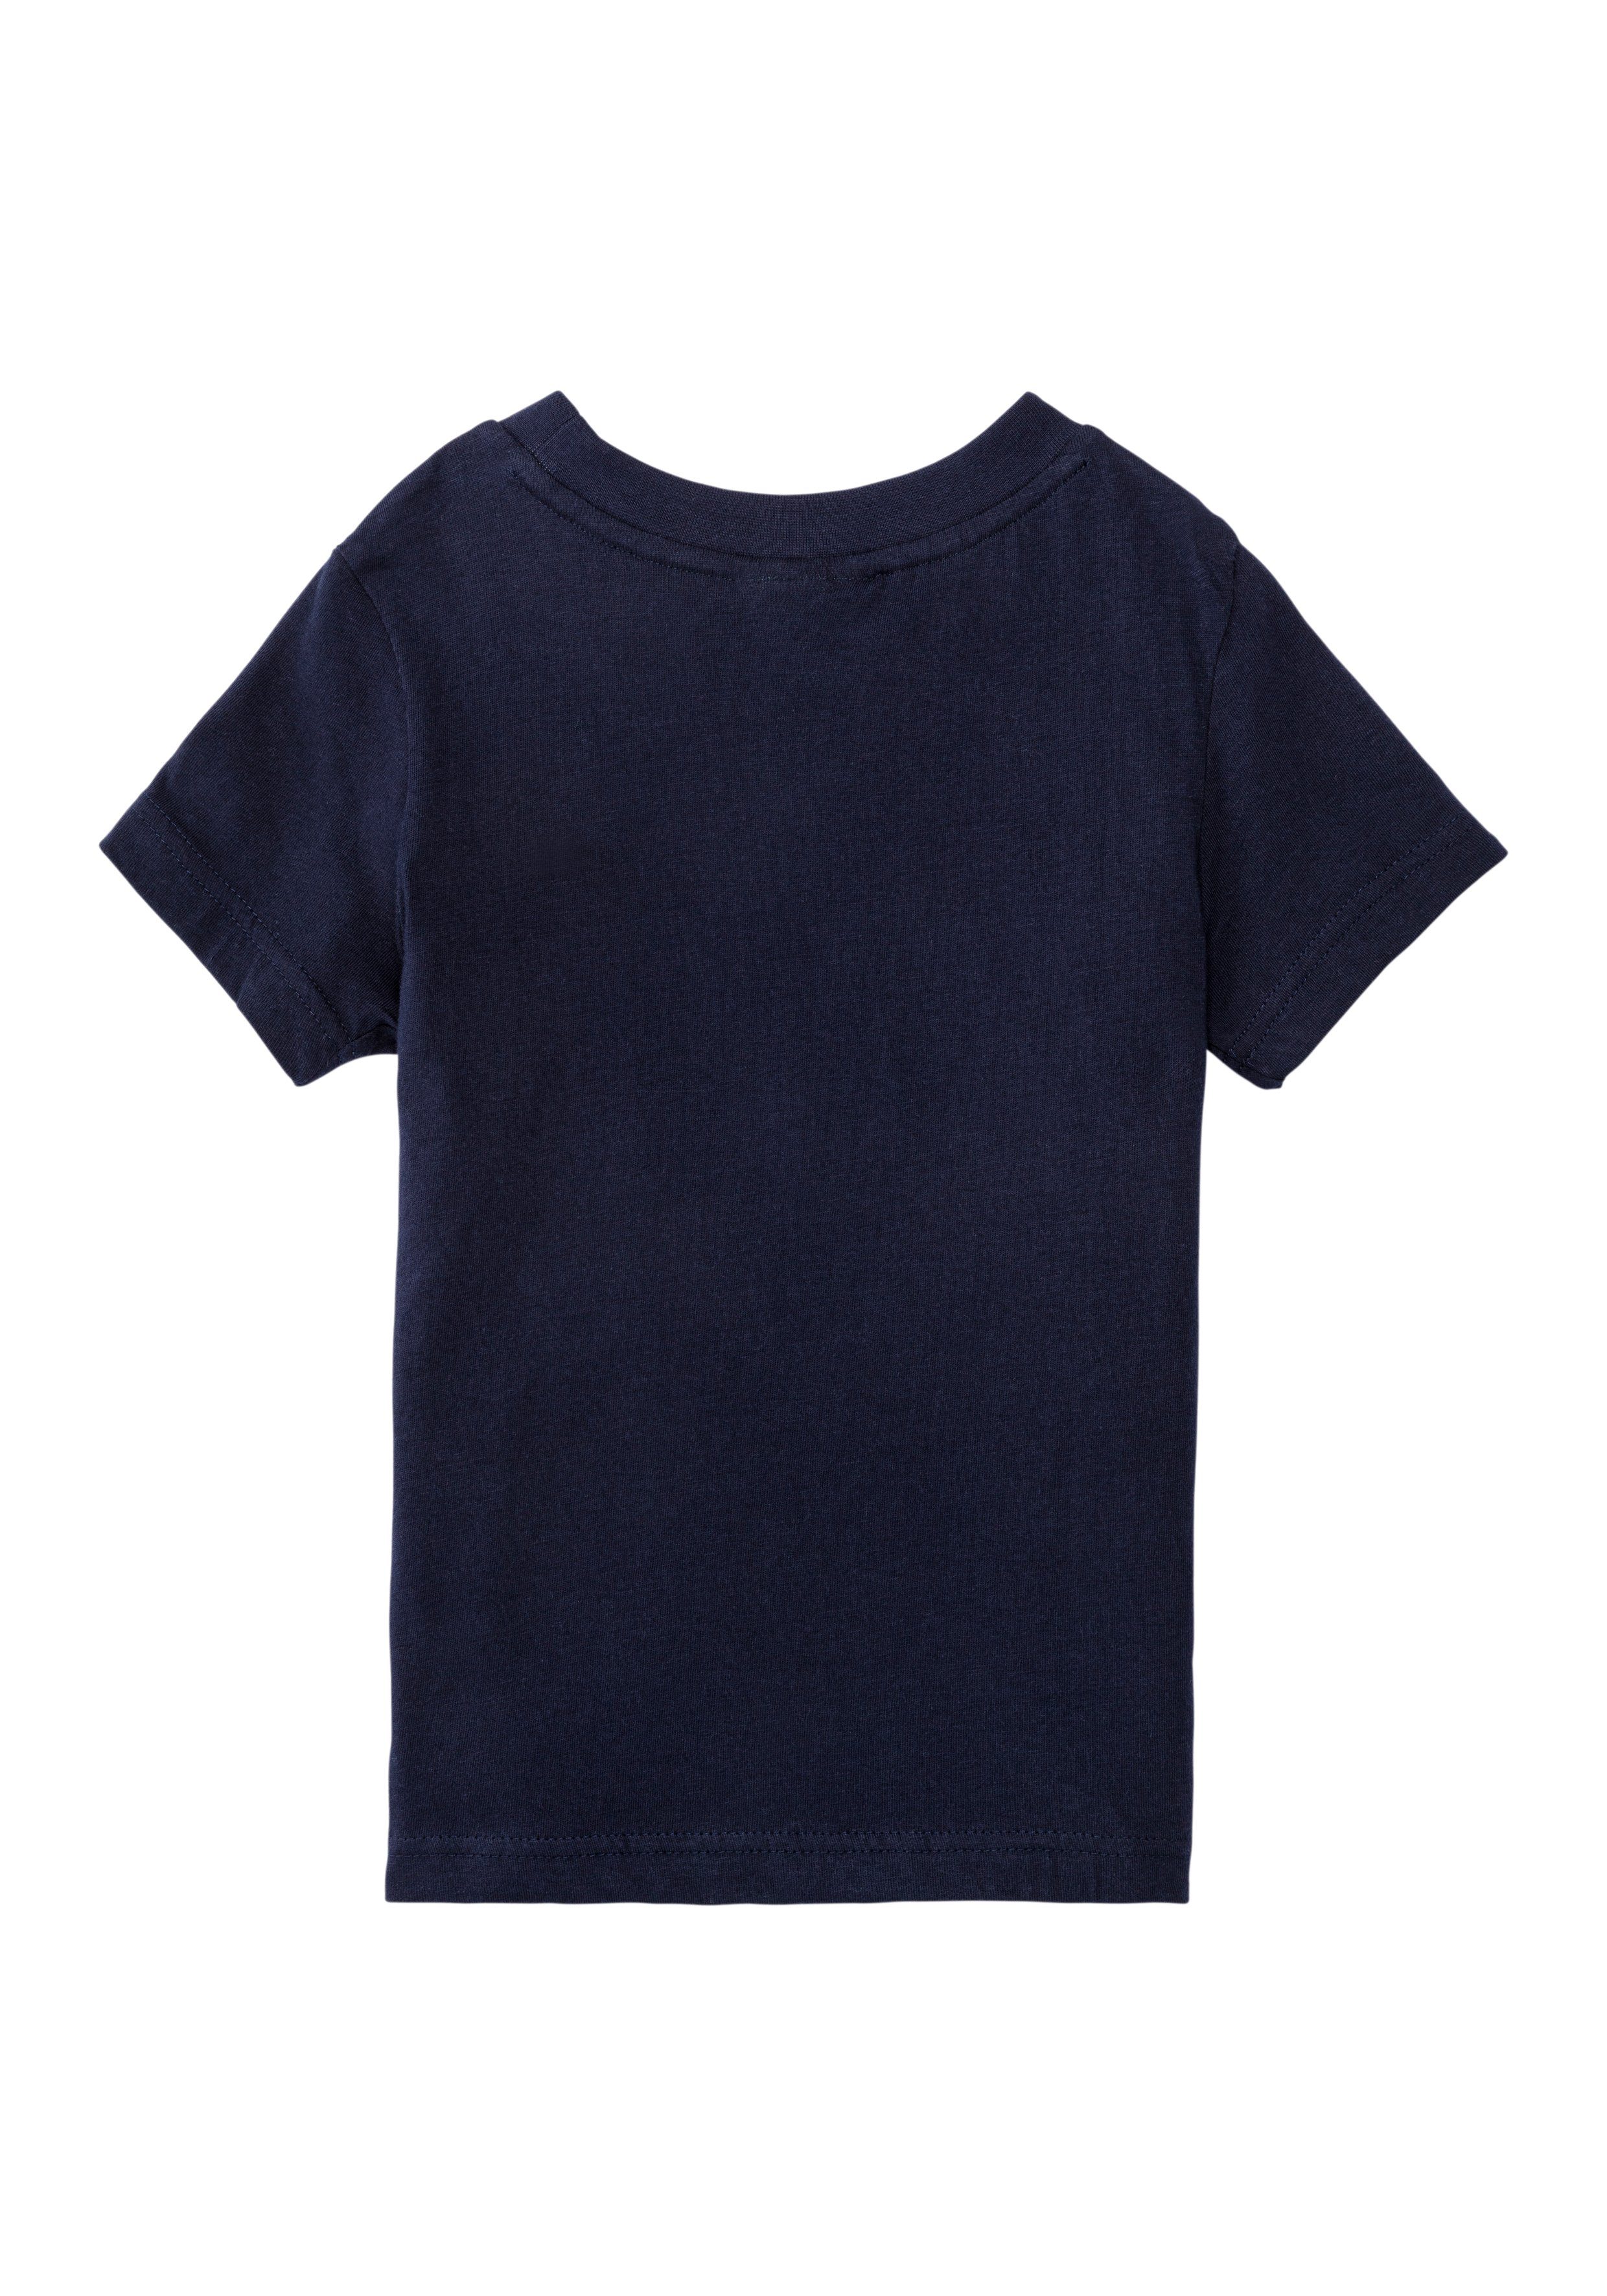 Lacoste-Krokodil BLUE Brusthöhe Lacoste NAVY mit T-Shirt auf